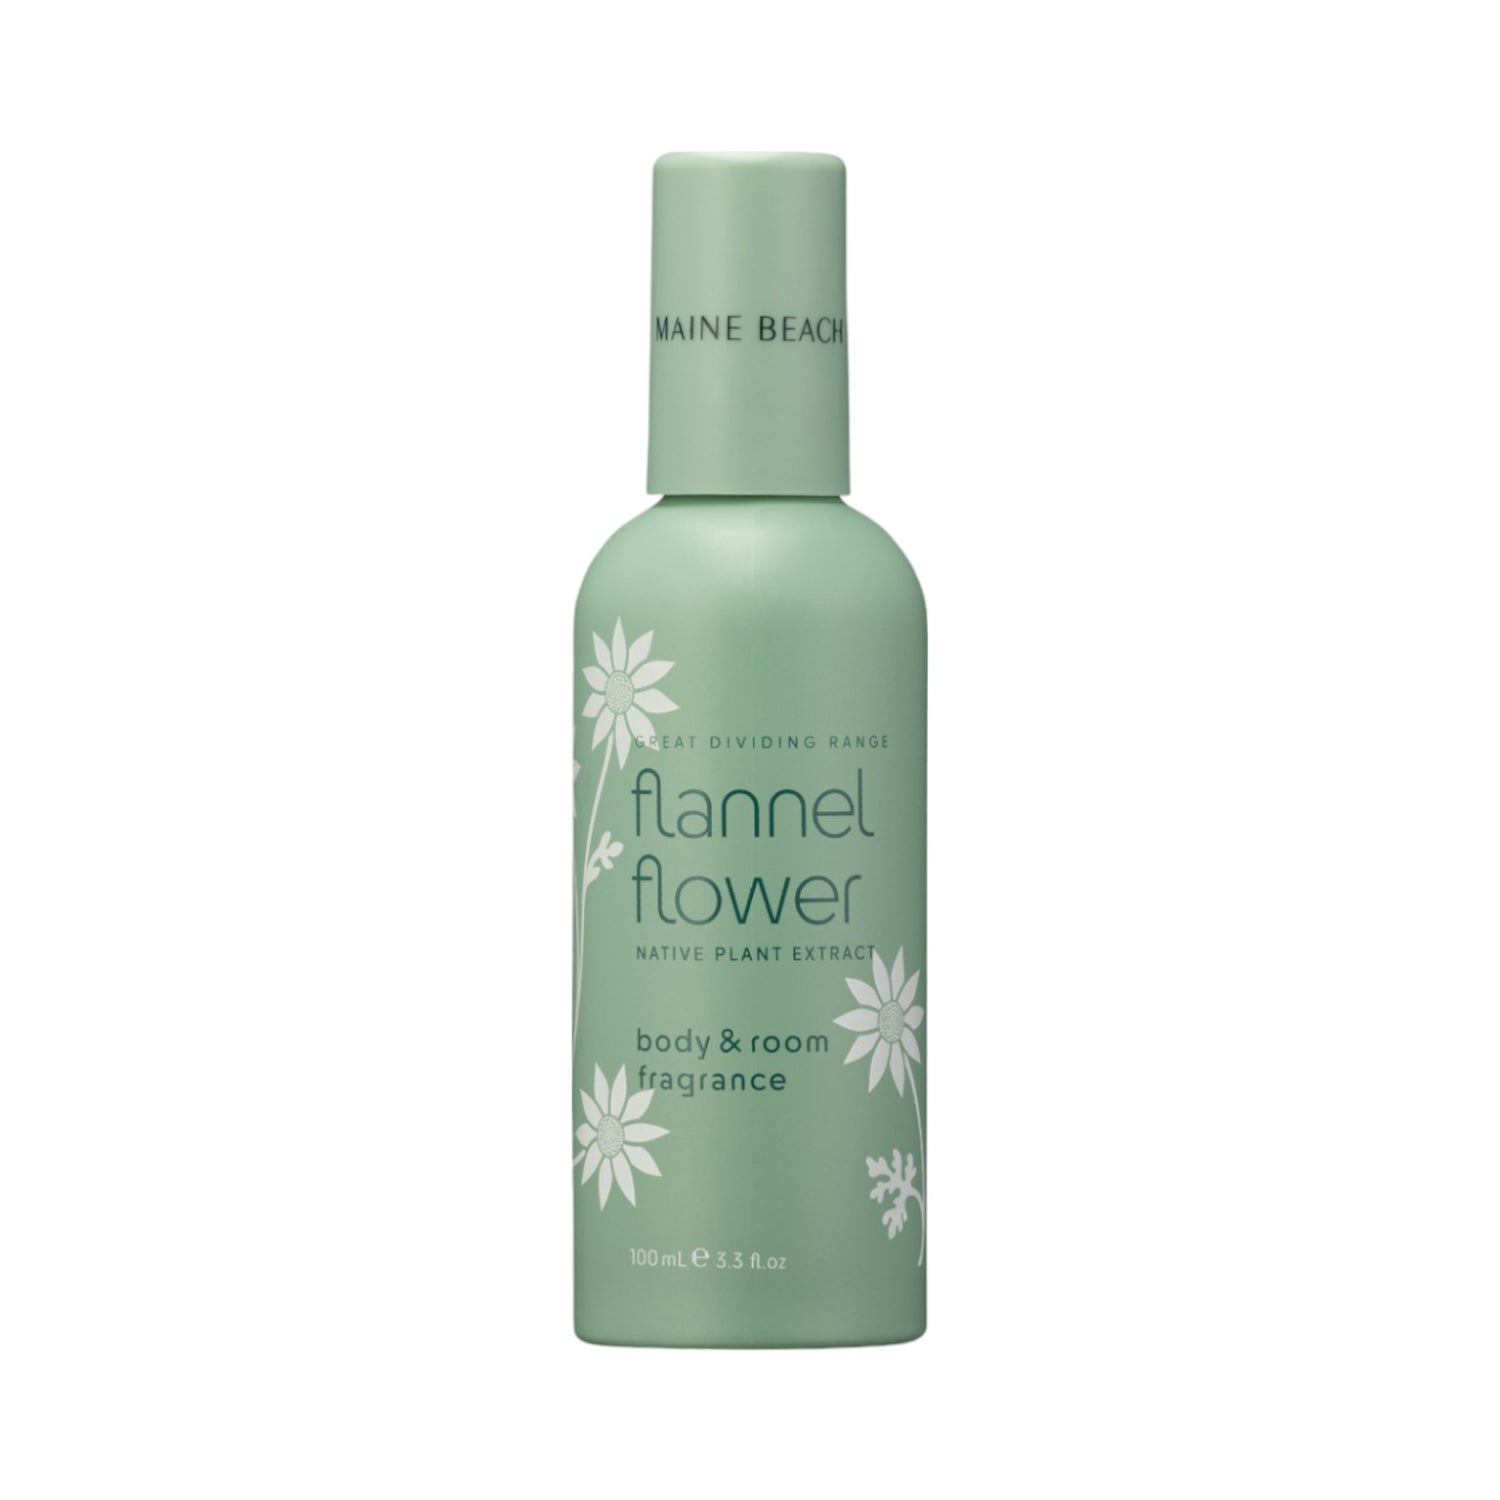 Flannel Flower Body & Room Fragrance